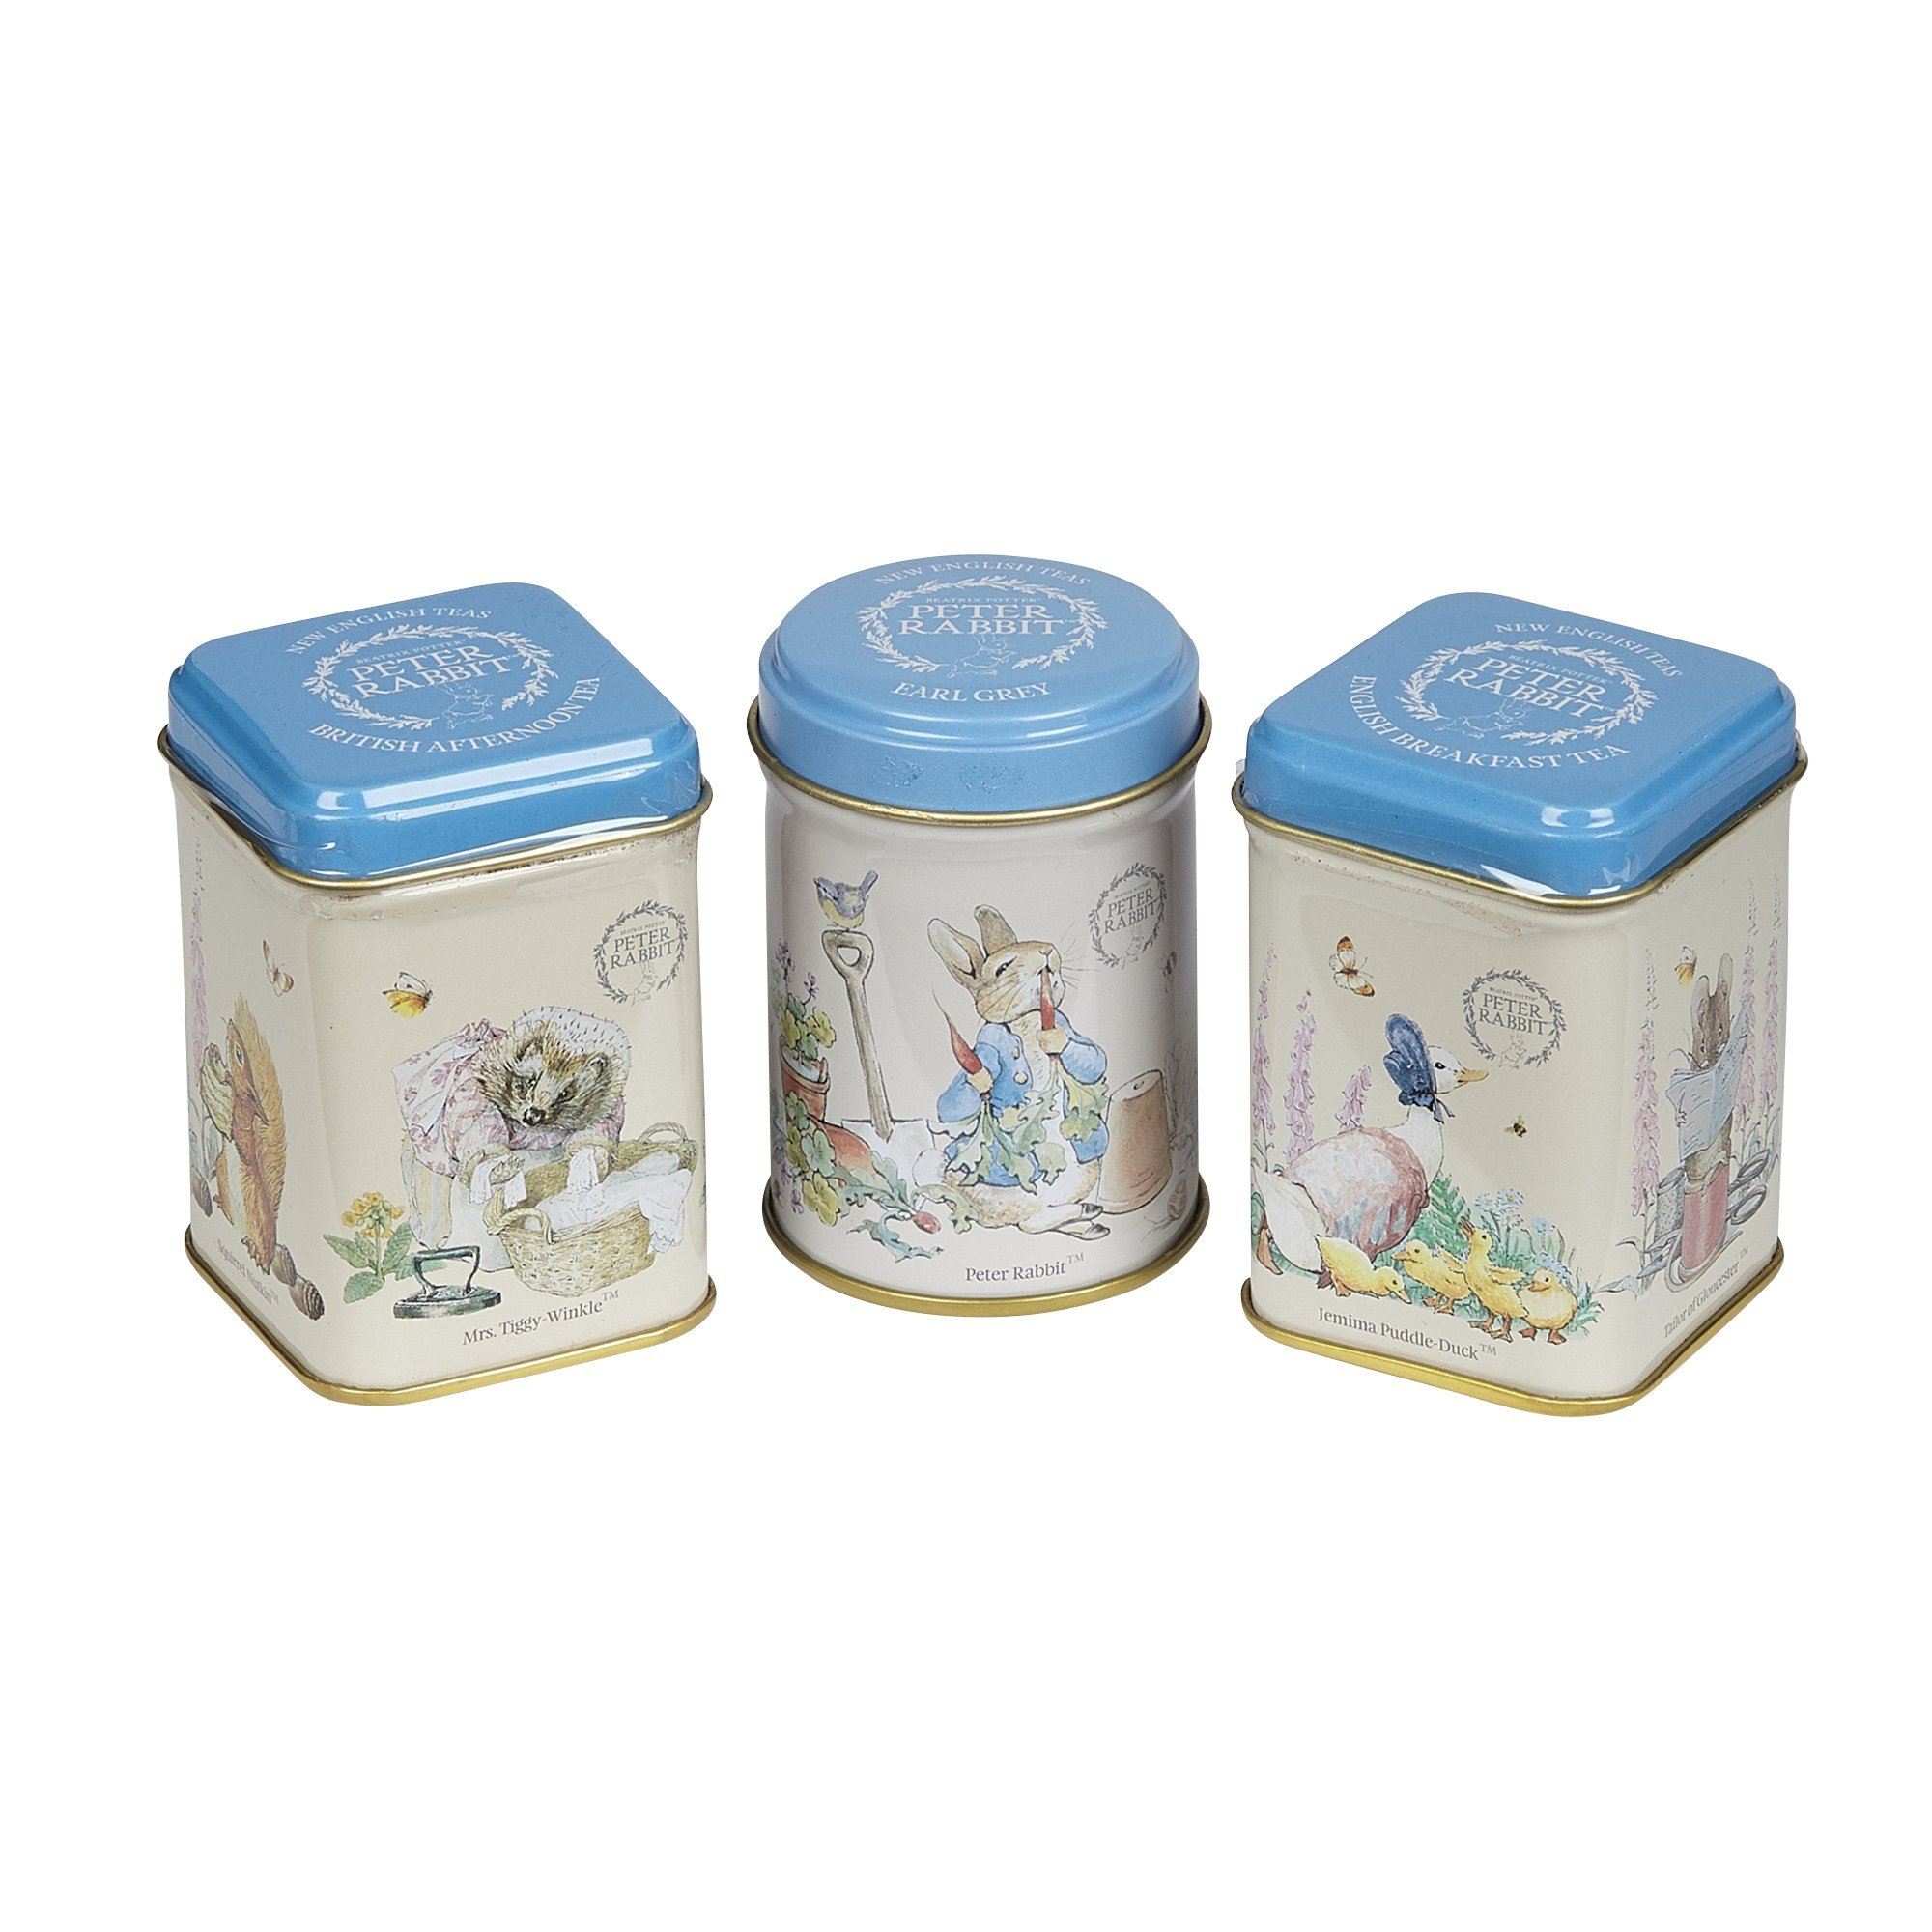 New English Teas Beatrix Potter Mini Tea Tin Gift Pack Black Tea New English Teas 